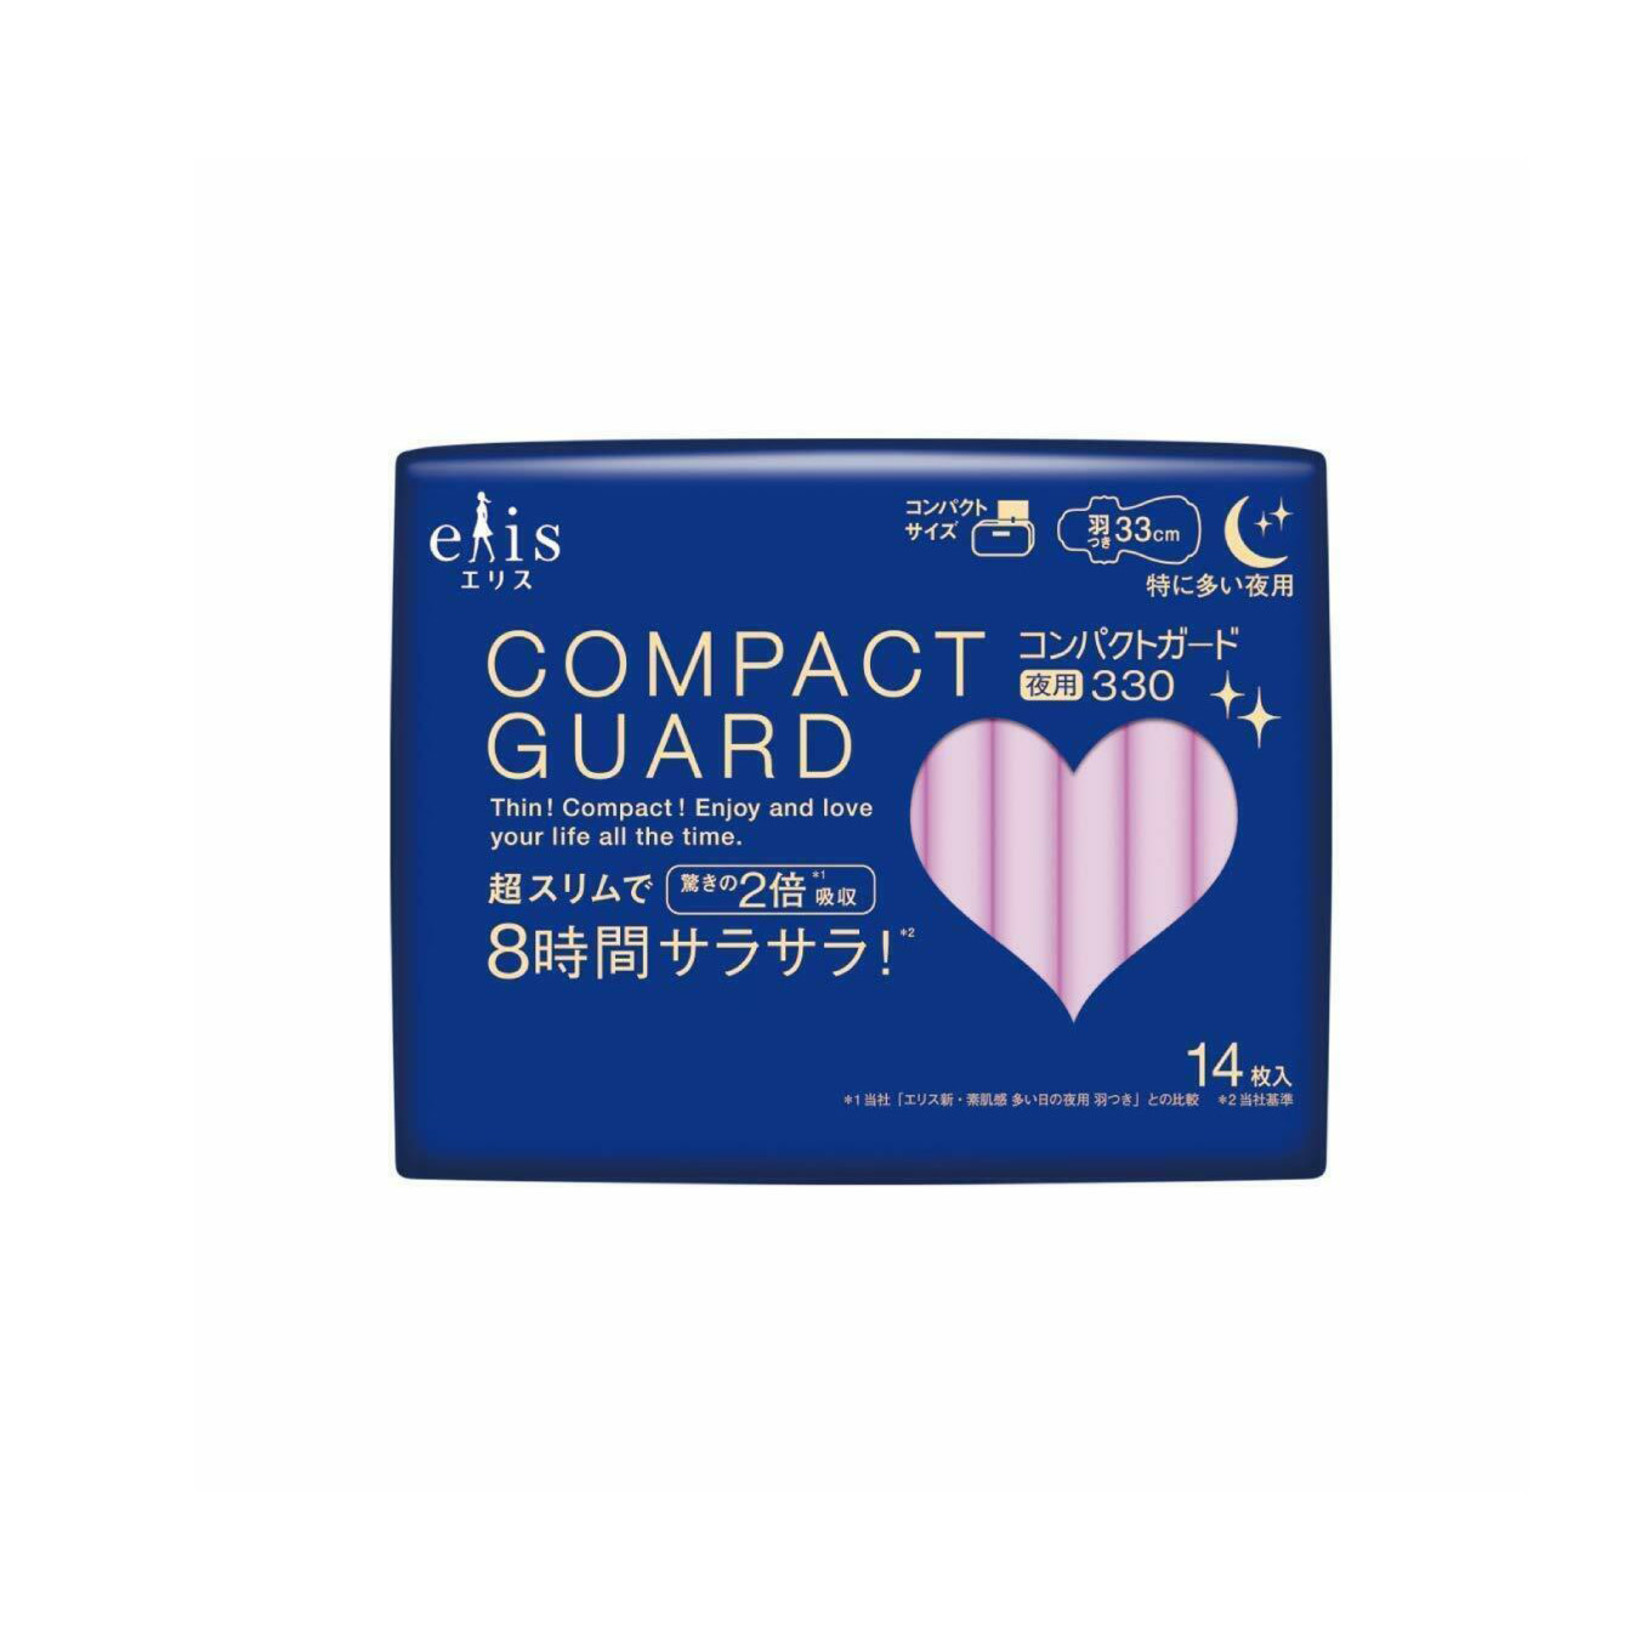 Elleair Elis Compact Guard Sanitary Napkin Especially Heavy Day Overnight